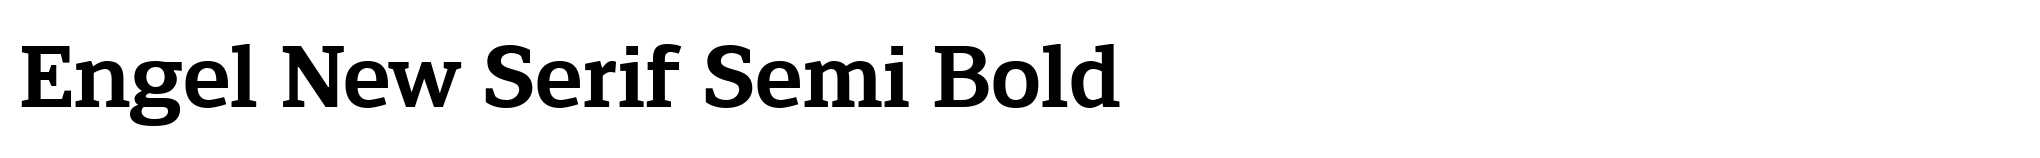 Engel New Serif Semi Bold image